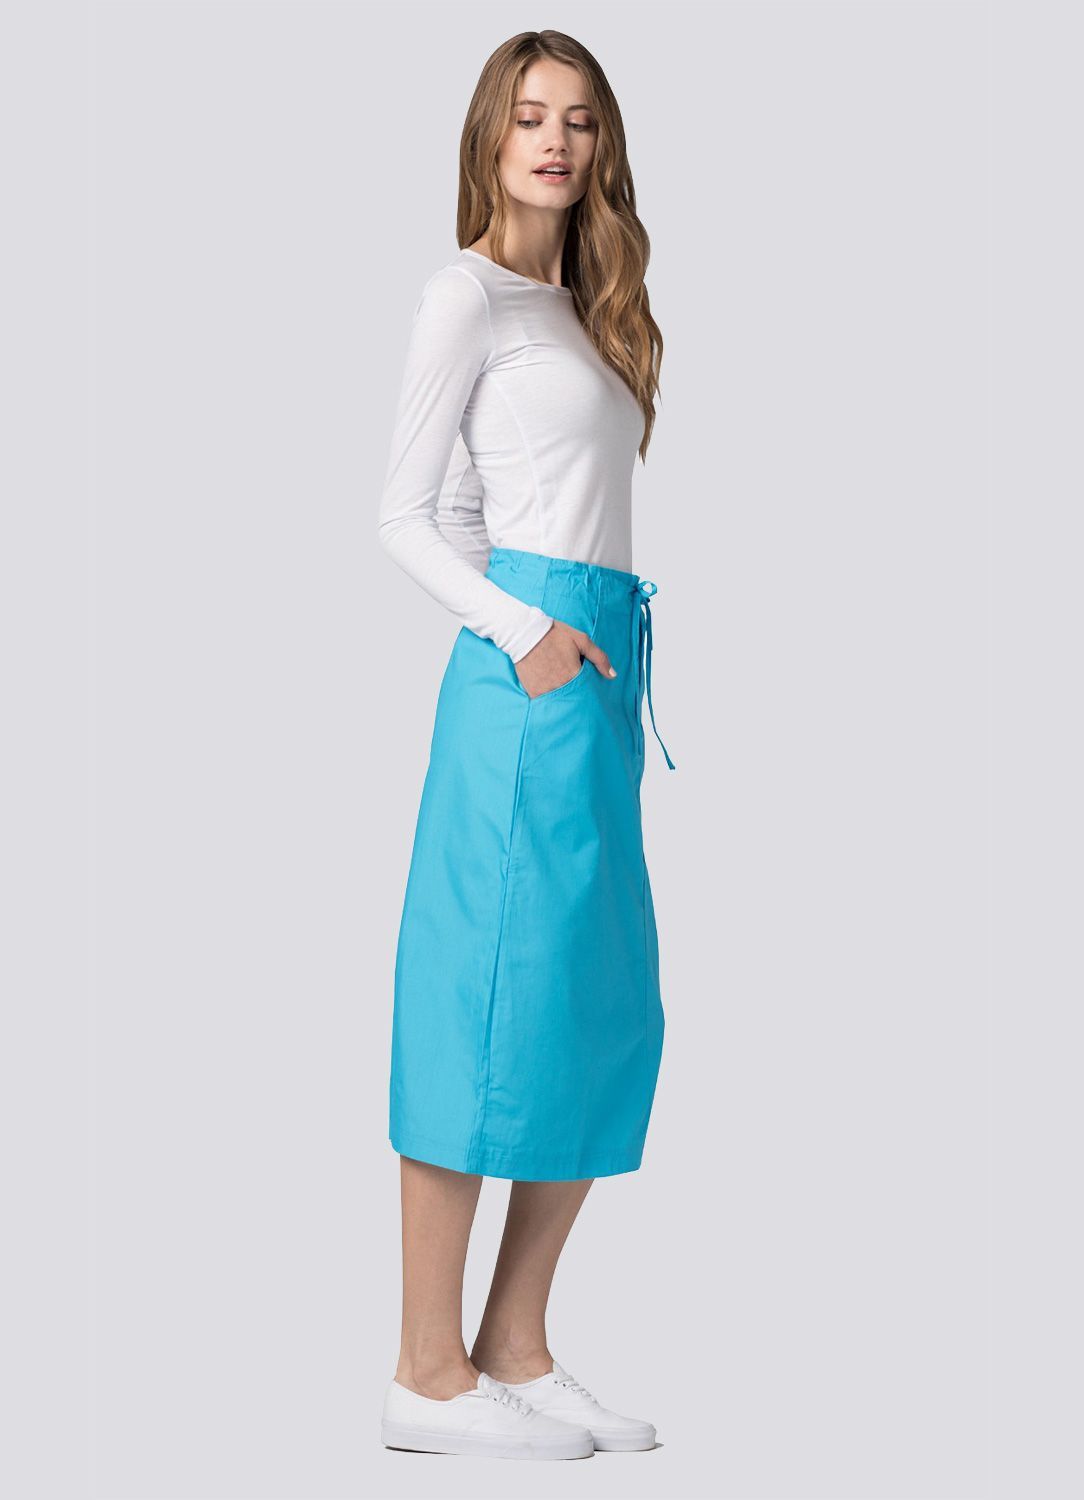 Mid-Calf Length Drawstring Skirt by Adar 6-24 /  TURQUOISE